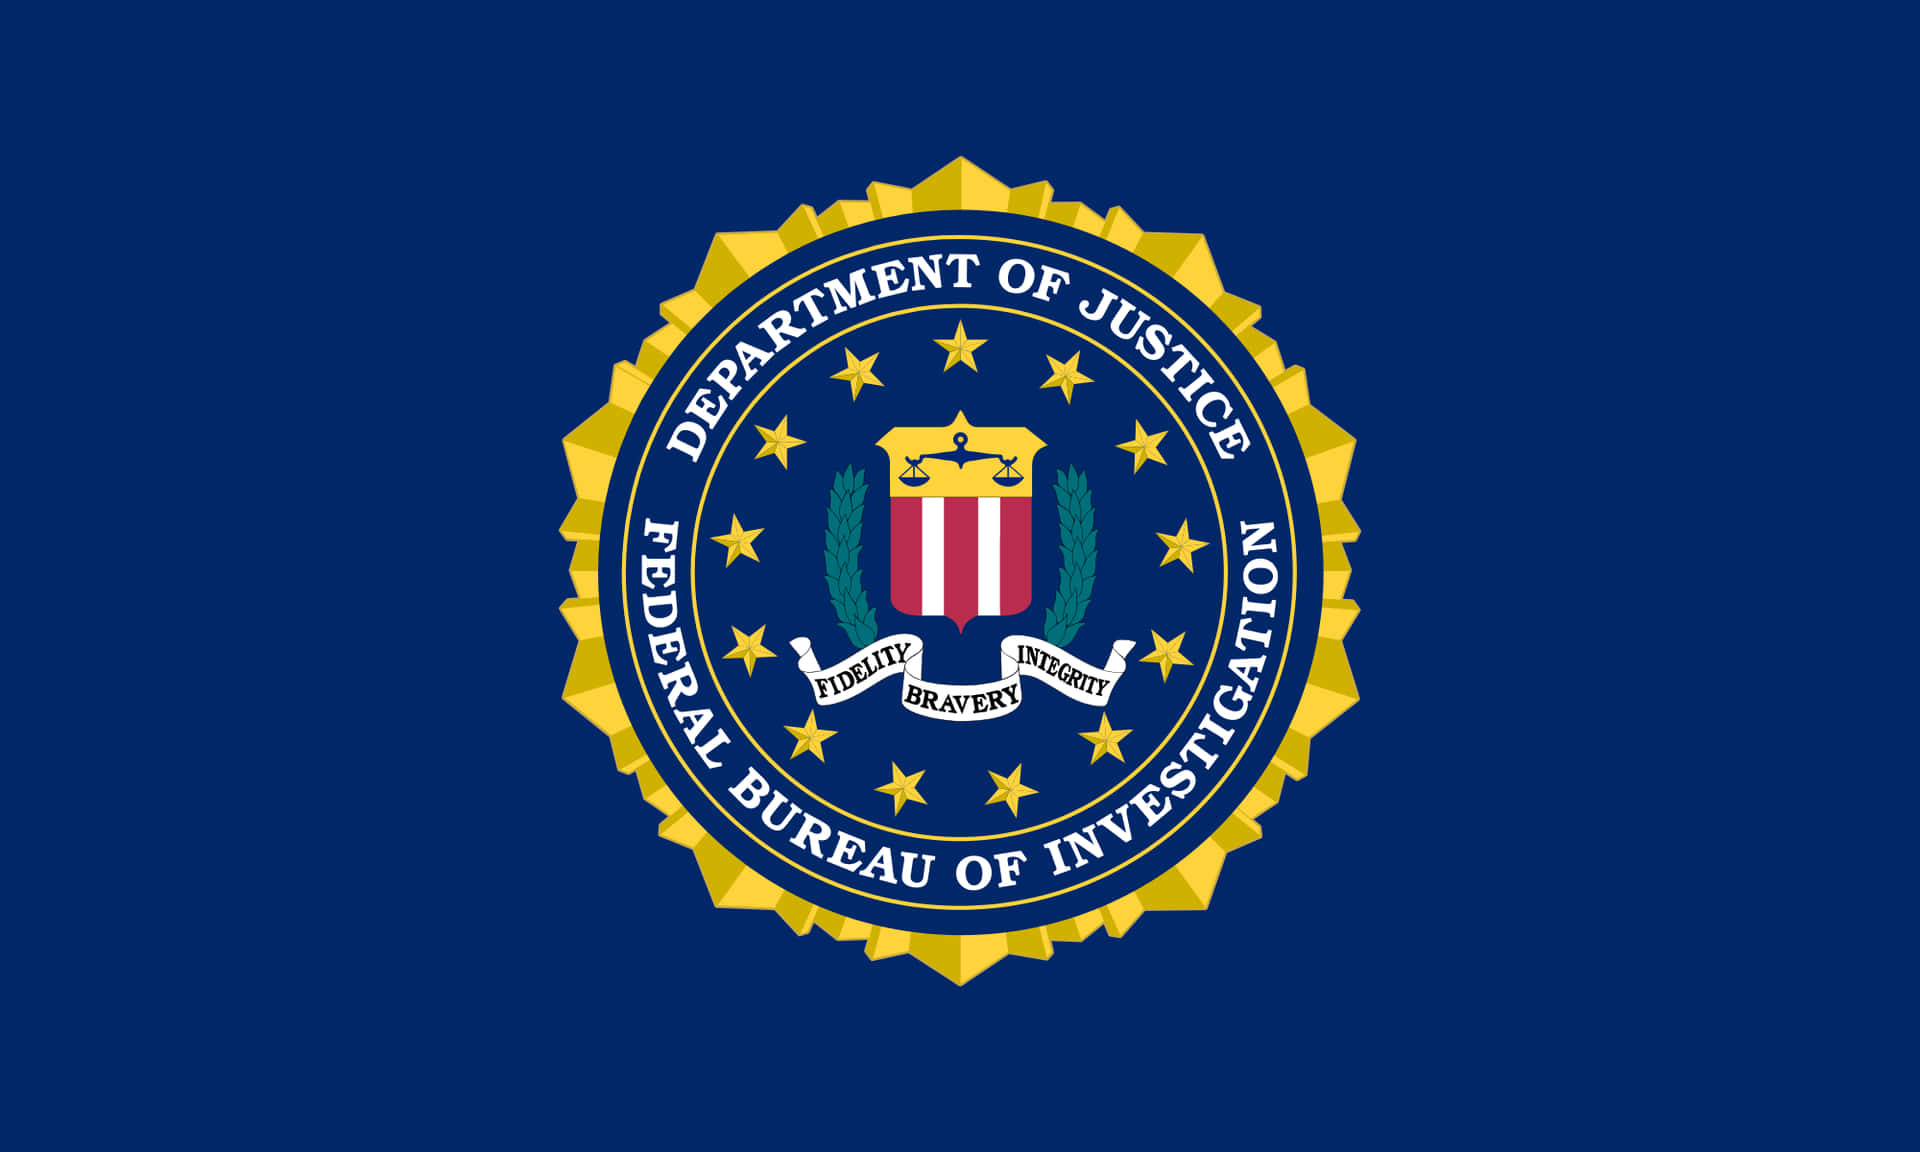 The Fbi Logo On A Blue Background